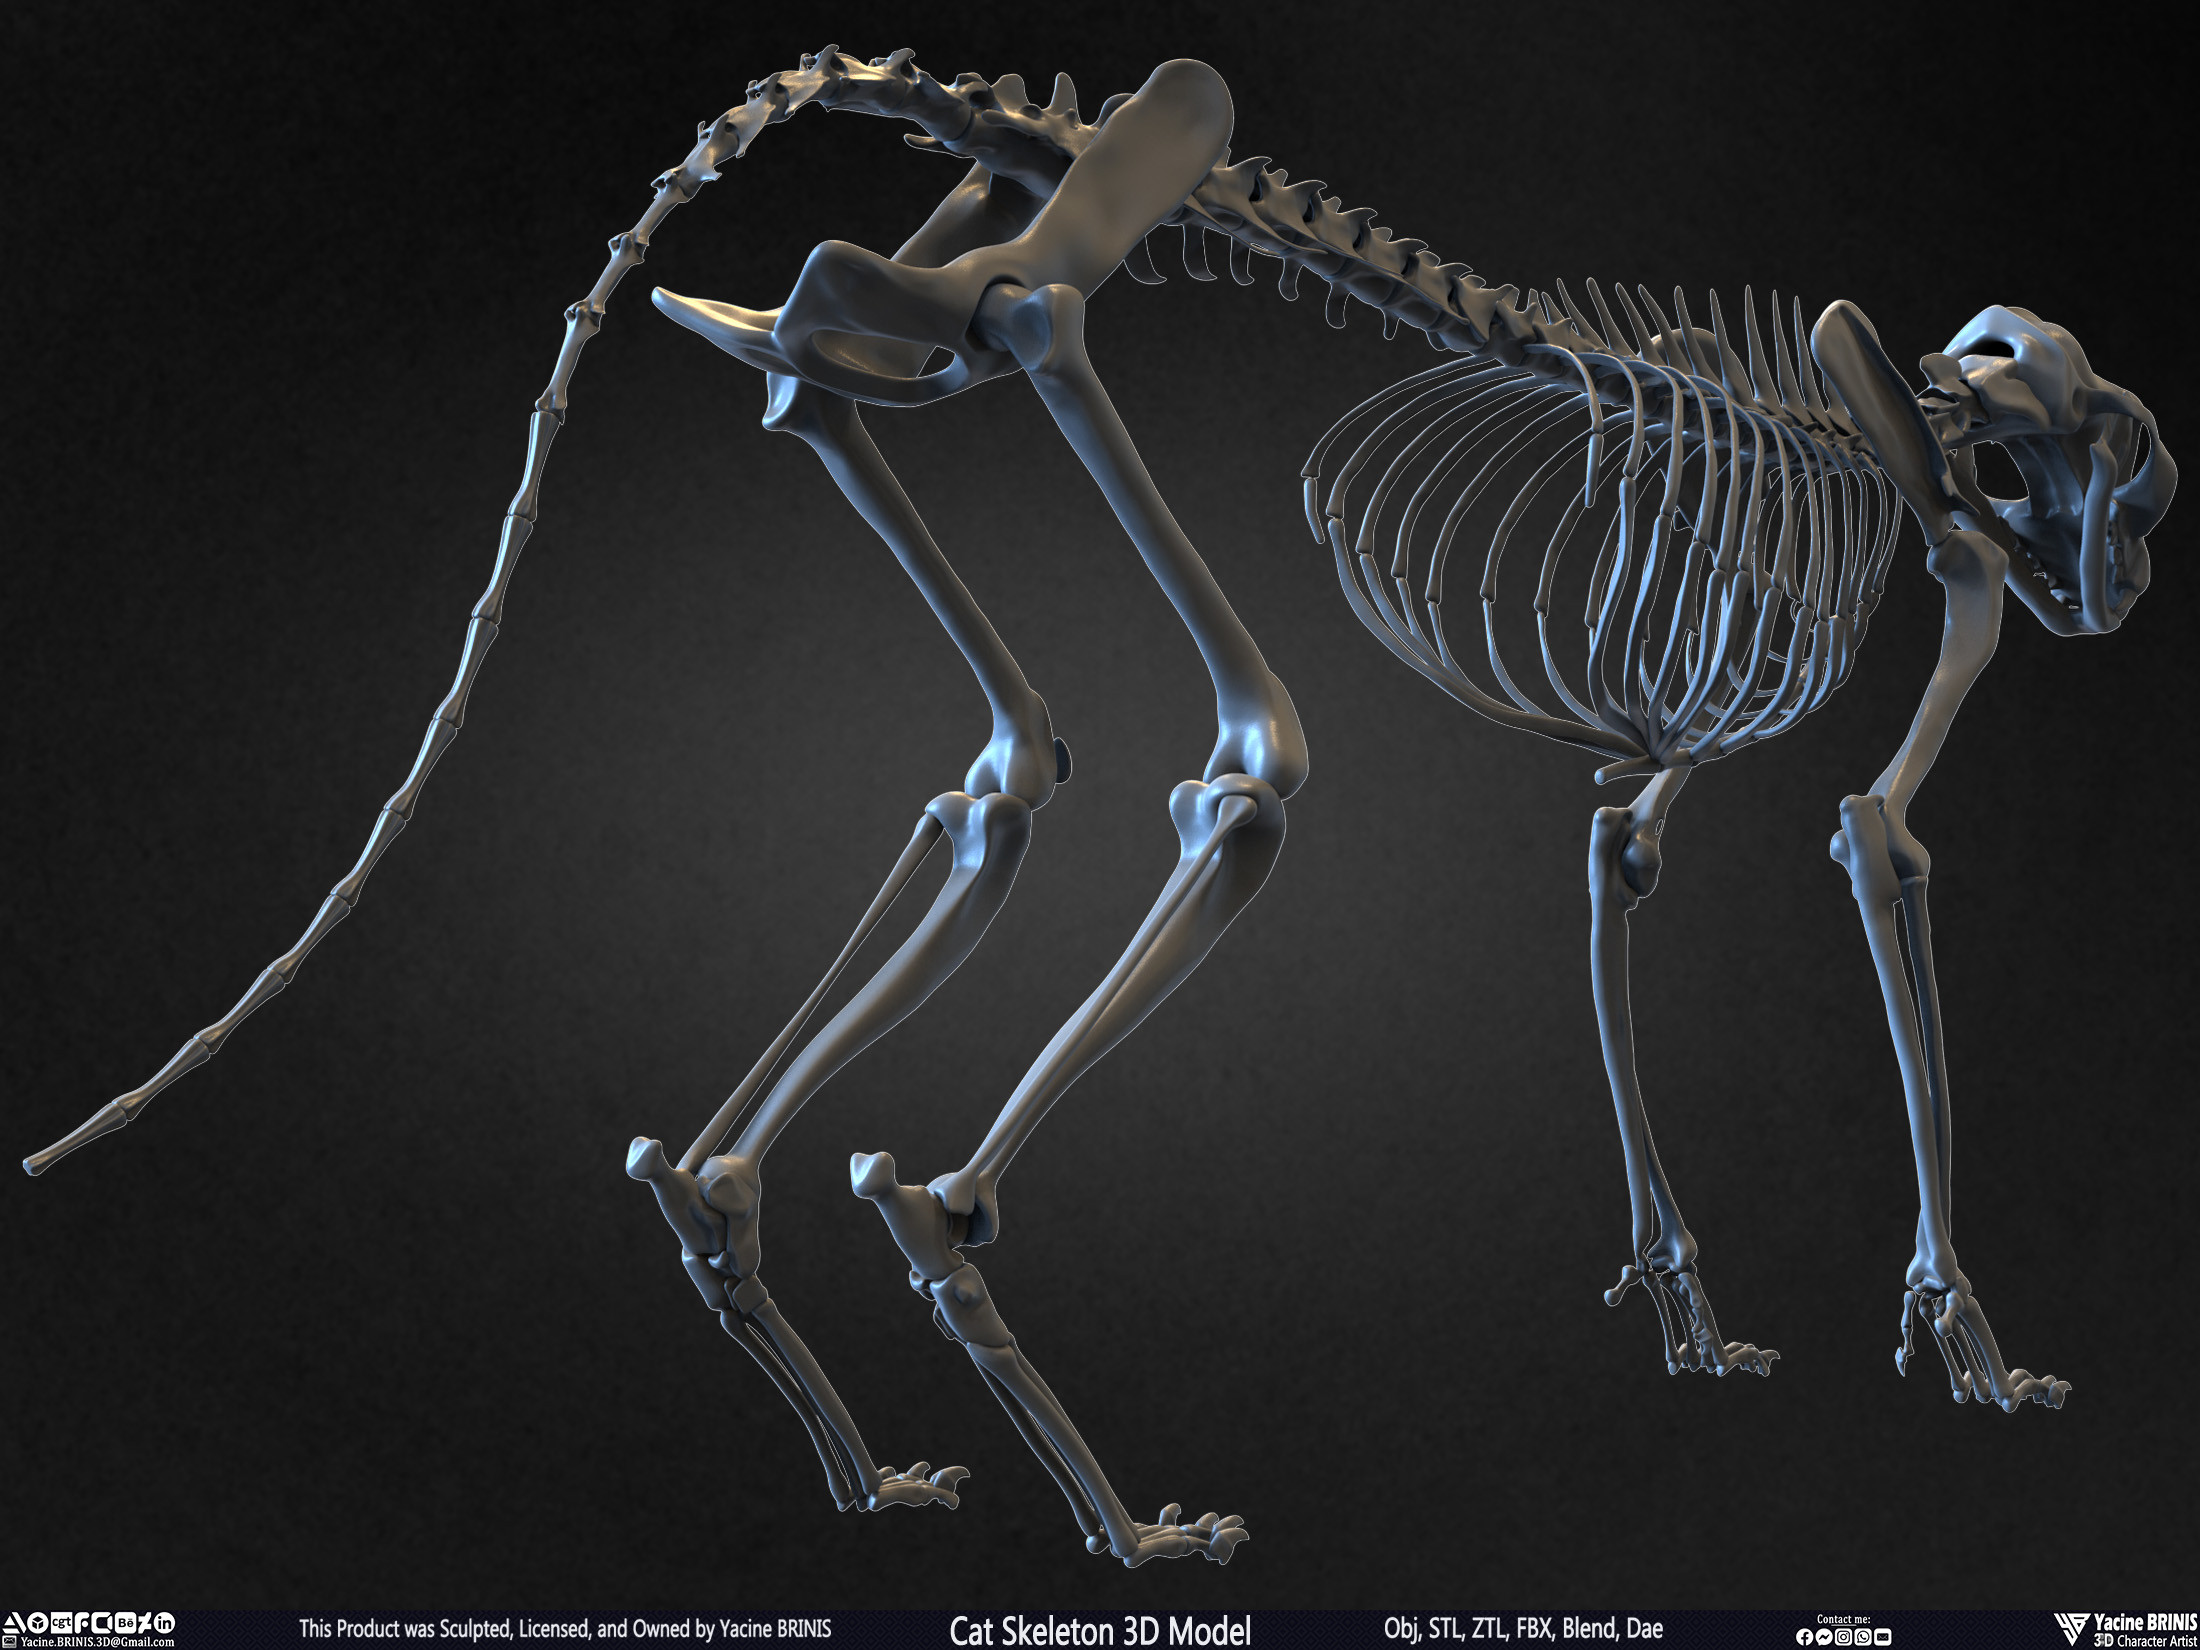 Highly Detailed Cat Skeleton 3D Model Sculpted by Yacine BRINIS Set 021